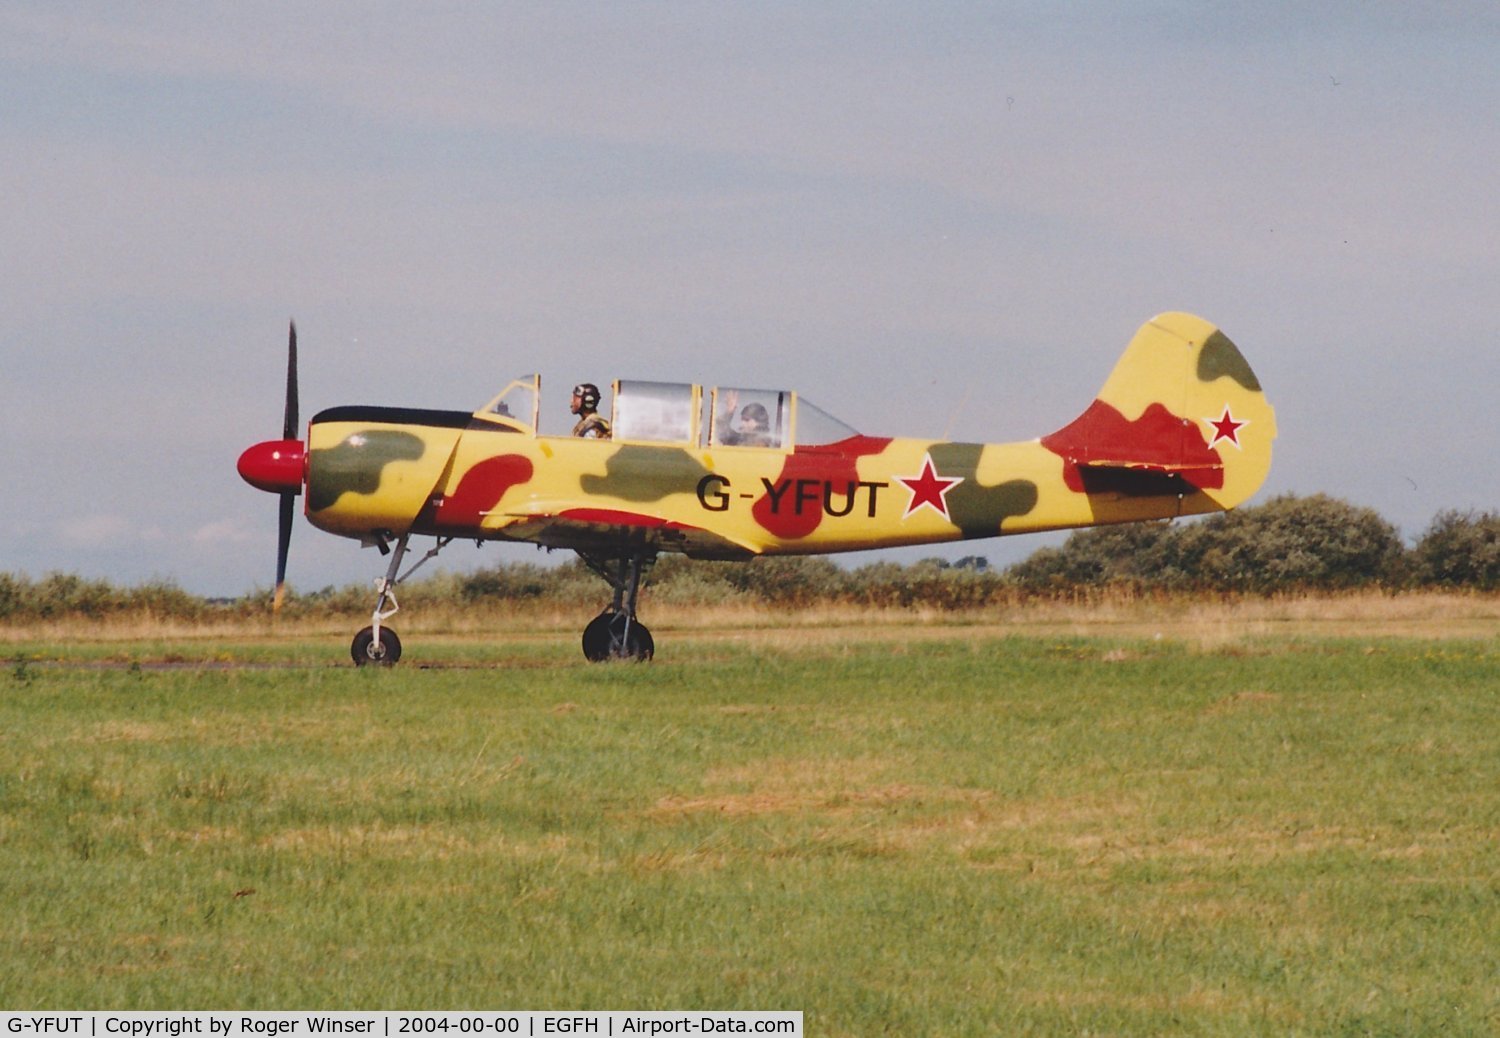 G-YFUT, 1988 Bacau Yak-52 C/N 888410, Returning to base after formation aerobatics practice. July/August 2004.